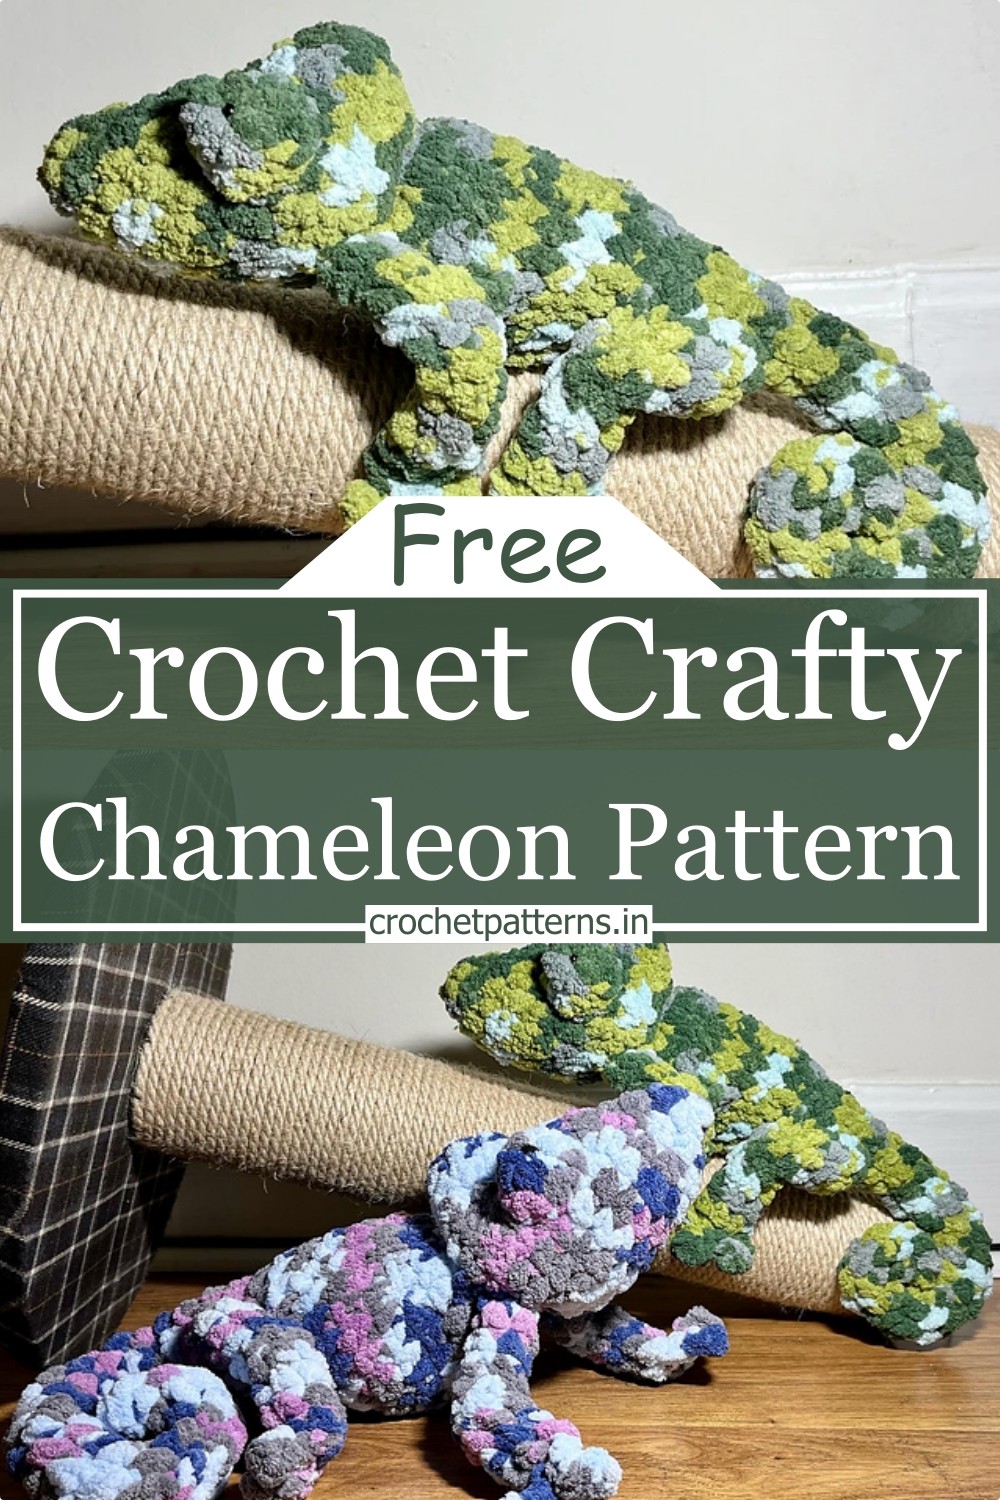 Crochet Crafty Chameleon Pattern